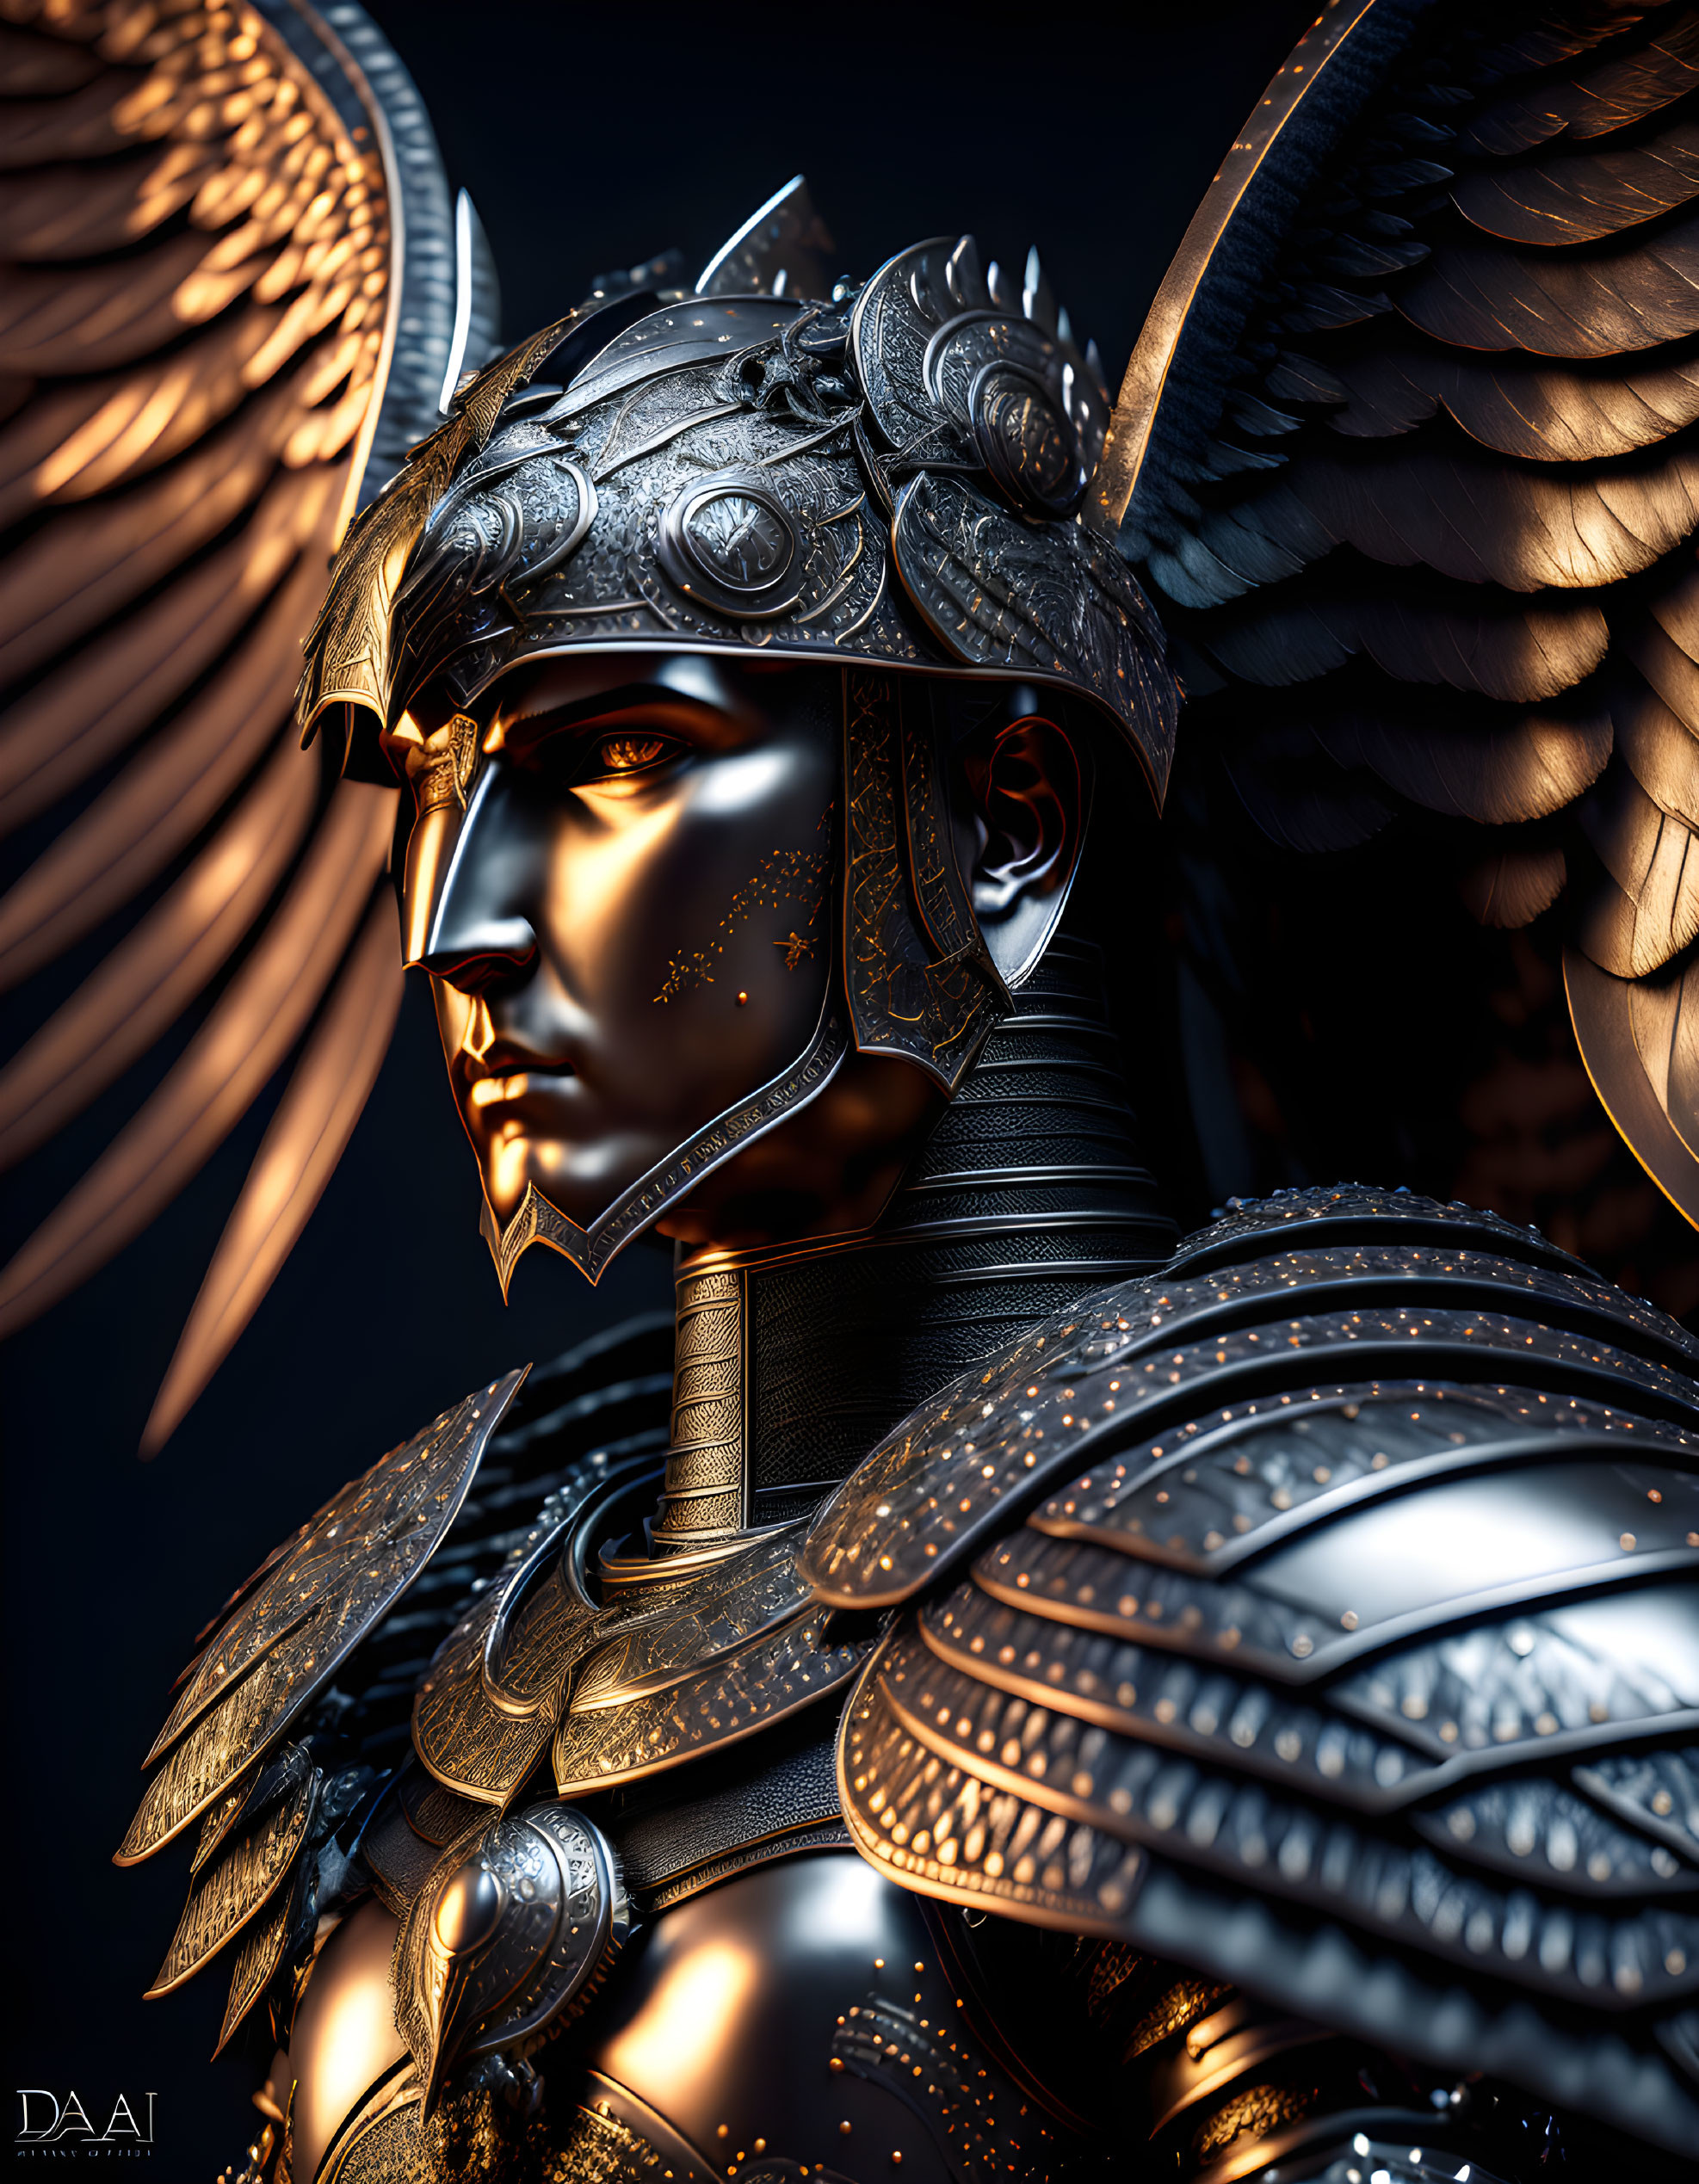 Digital artwork: Figure in ornate dark armor with winged helmet in golden light